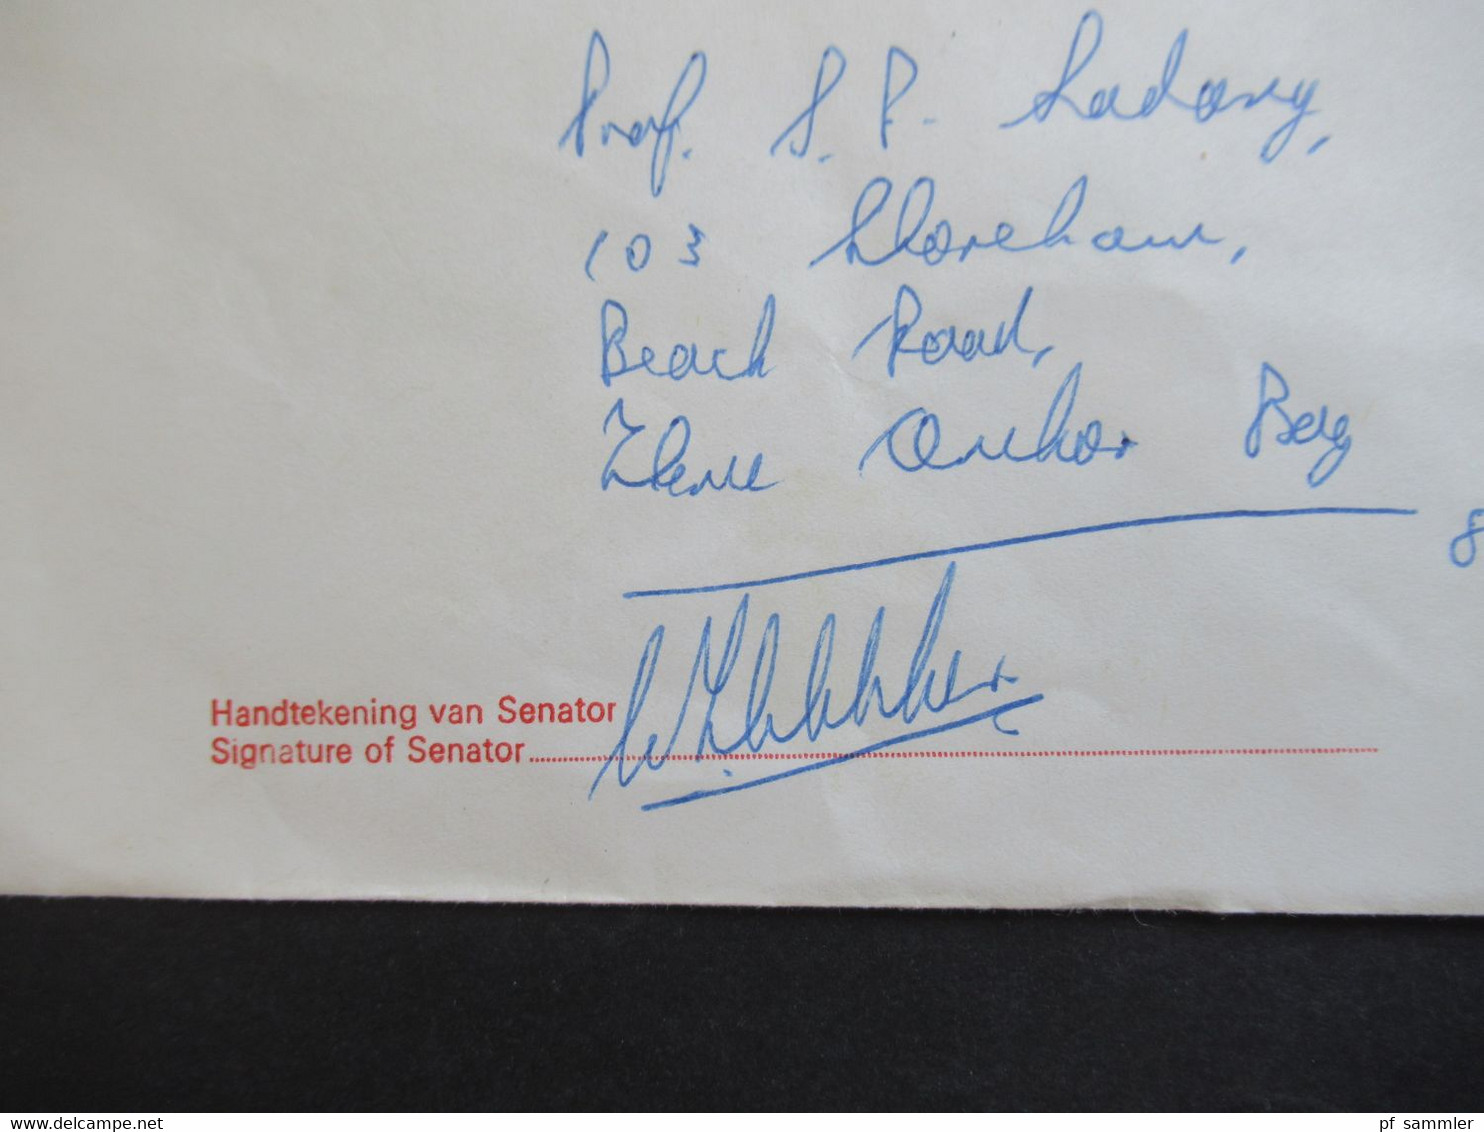 RSA / Süd - Afrika 1980er Jahre Umschlag Amptelik - Official And Signature Of Senator In Die USA Gesendet - Covers & Documents